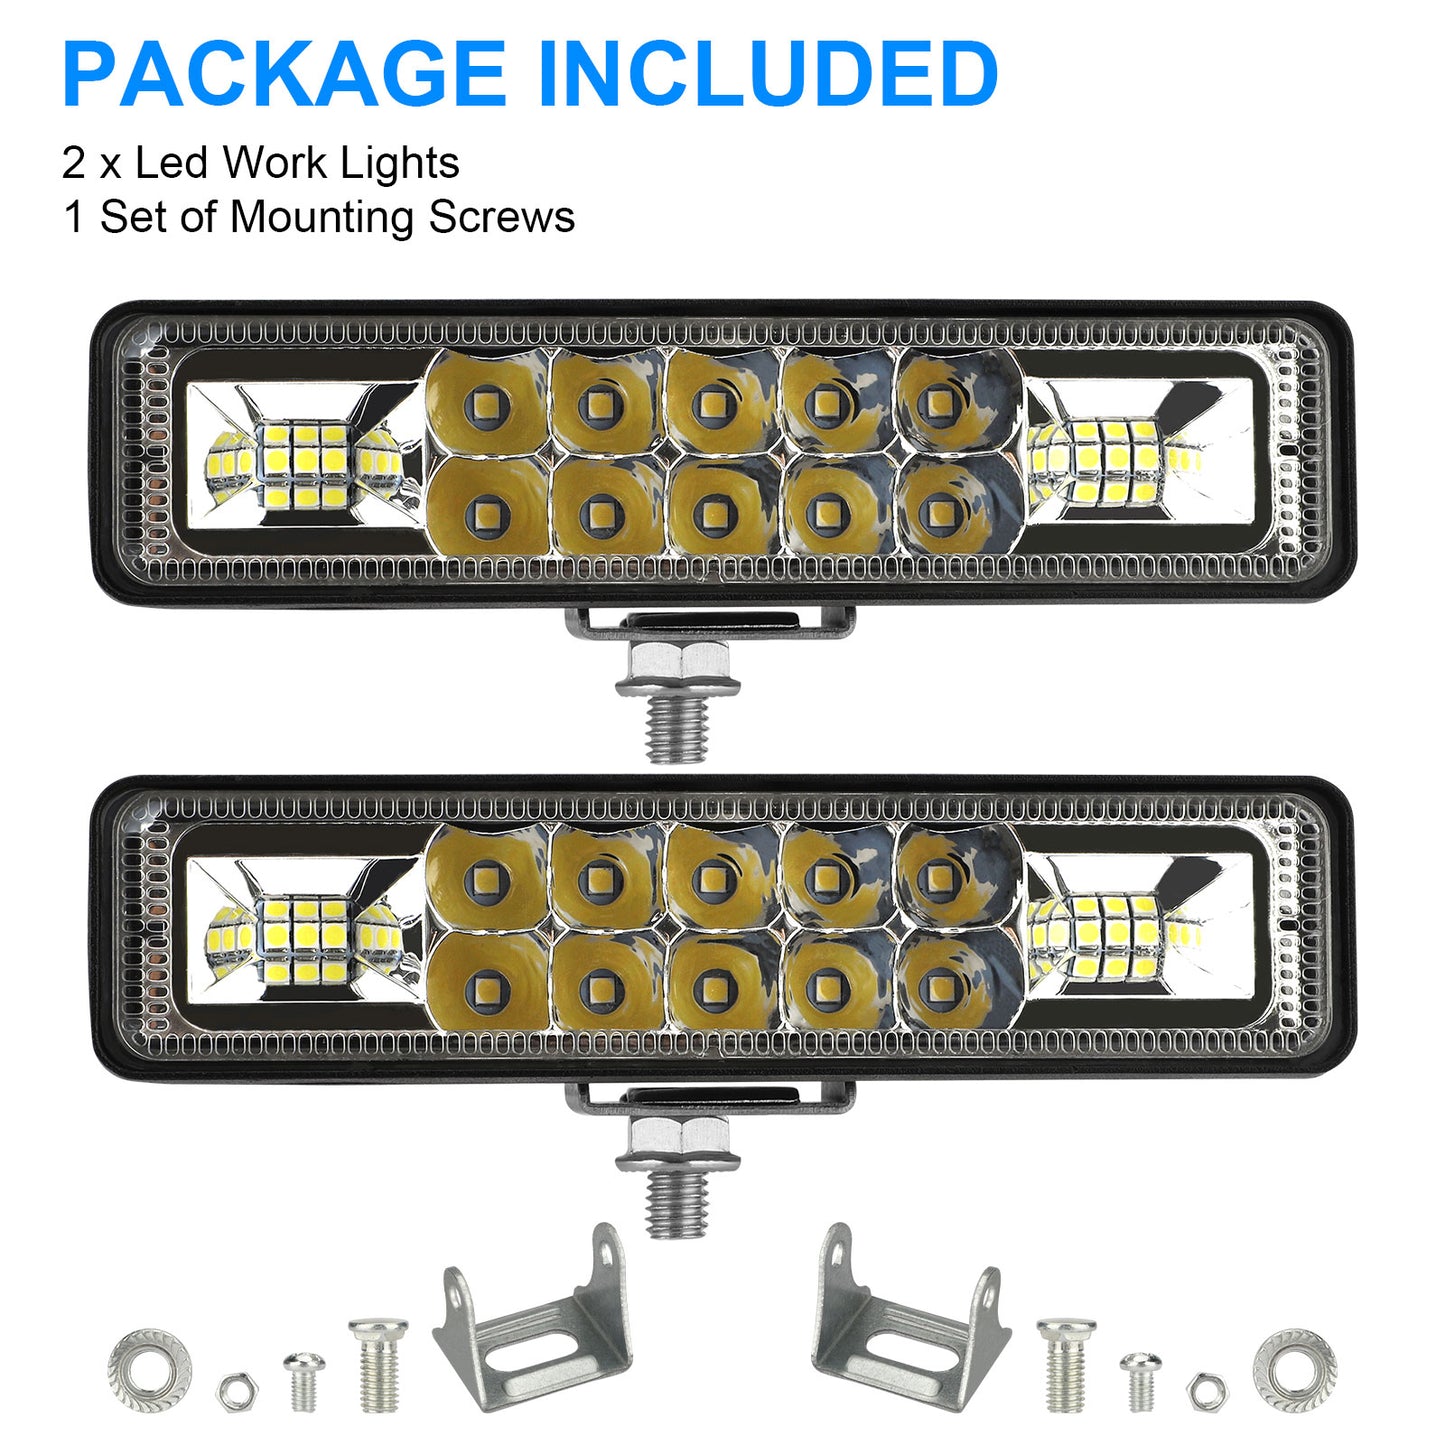 2Pcs 6-Inch LED Work Light Bar  - 1200LM, Waterproof, Long Lifespan, for trucks, off-road vehicles, and heavy equipment